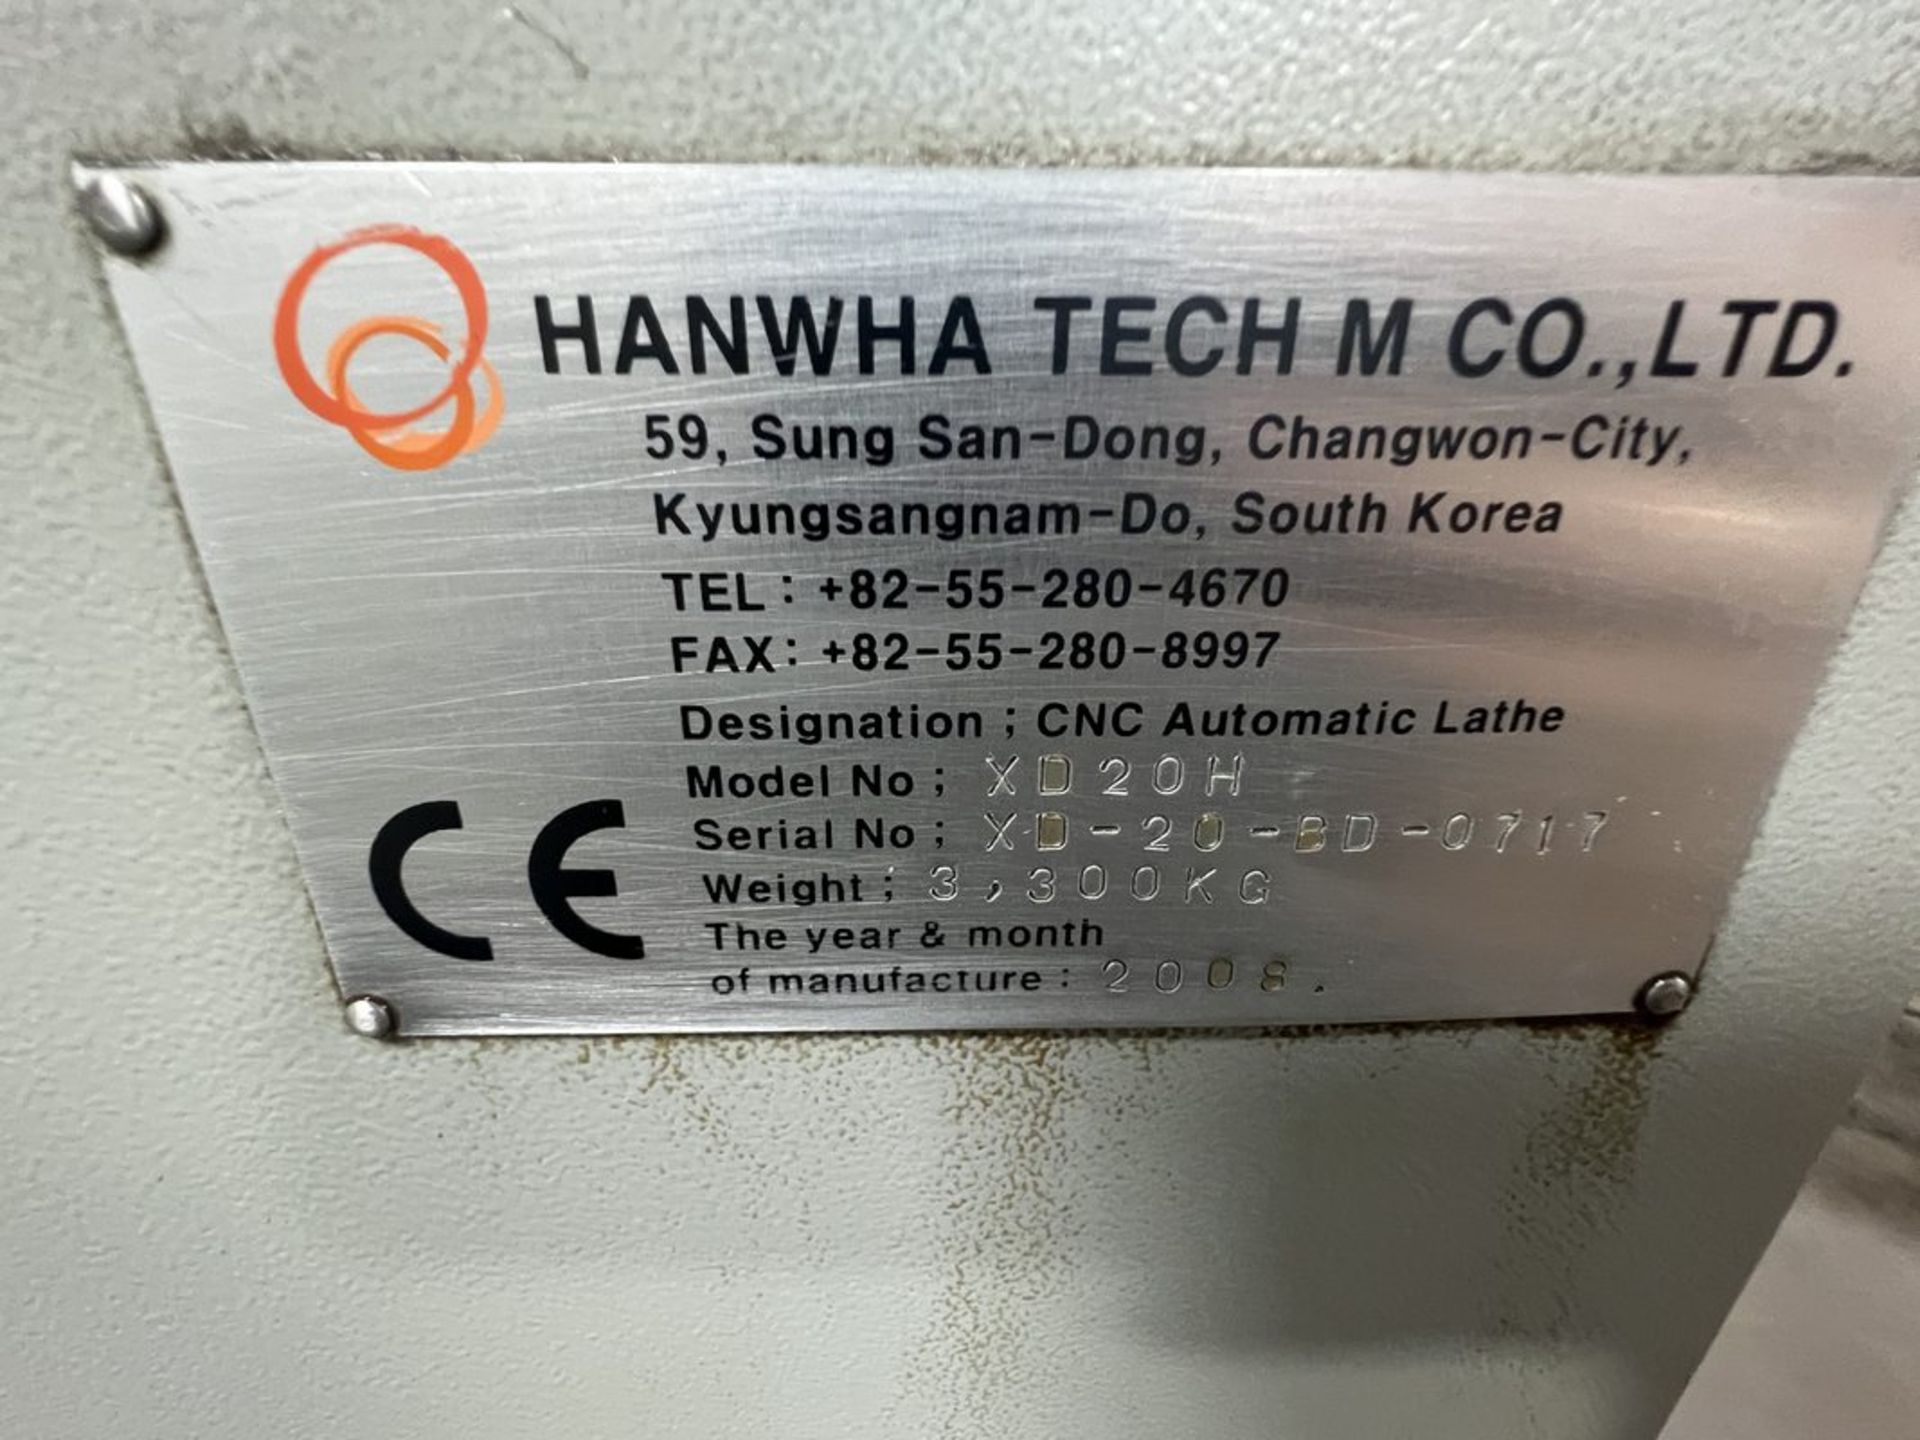 Hanwha XD20H 20 mm (3/4") 5-Axis CNC Swiss Lathe, S/N XD-20-BD-0717, 2008 - Image 7 of 18